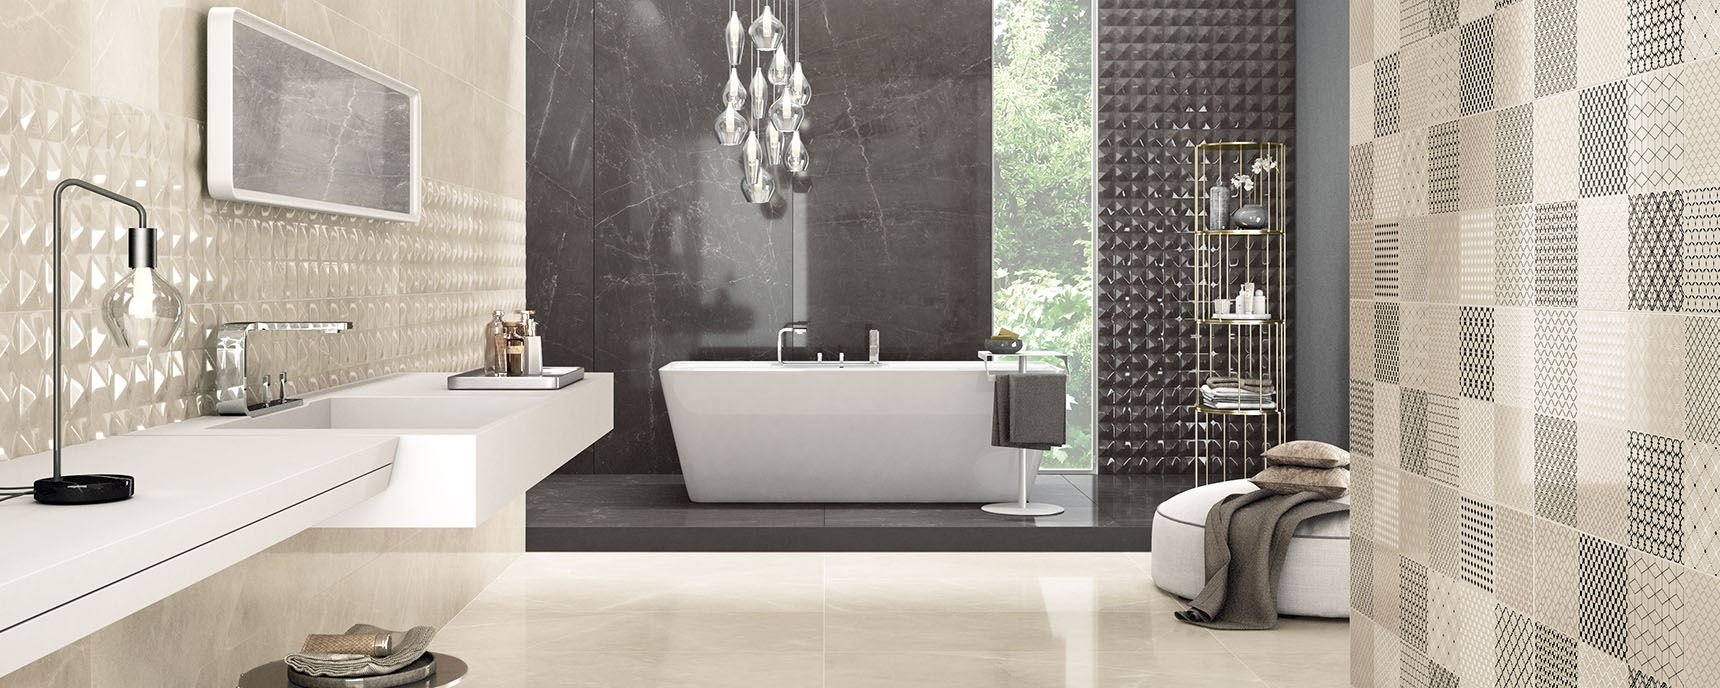 marmo bagni fliesen carrelage eleganti marmoroptik panaria salle bain marbre rivestimenti badezimmer grau imitation marmor pavimenti